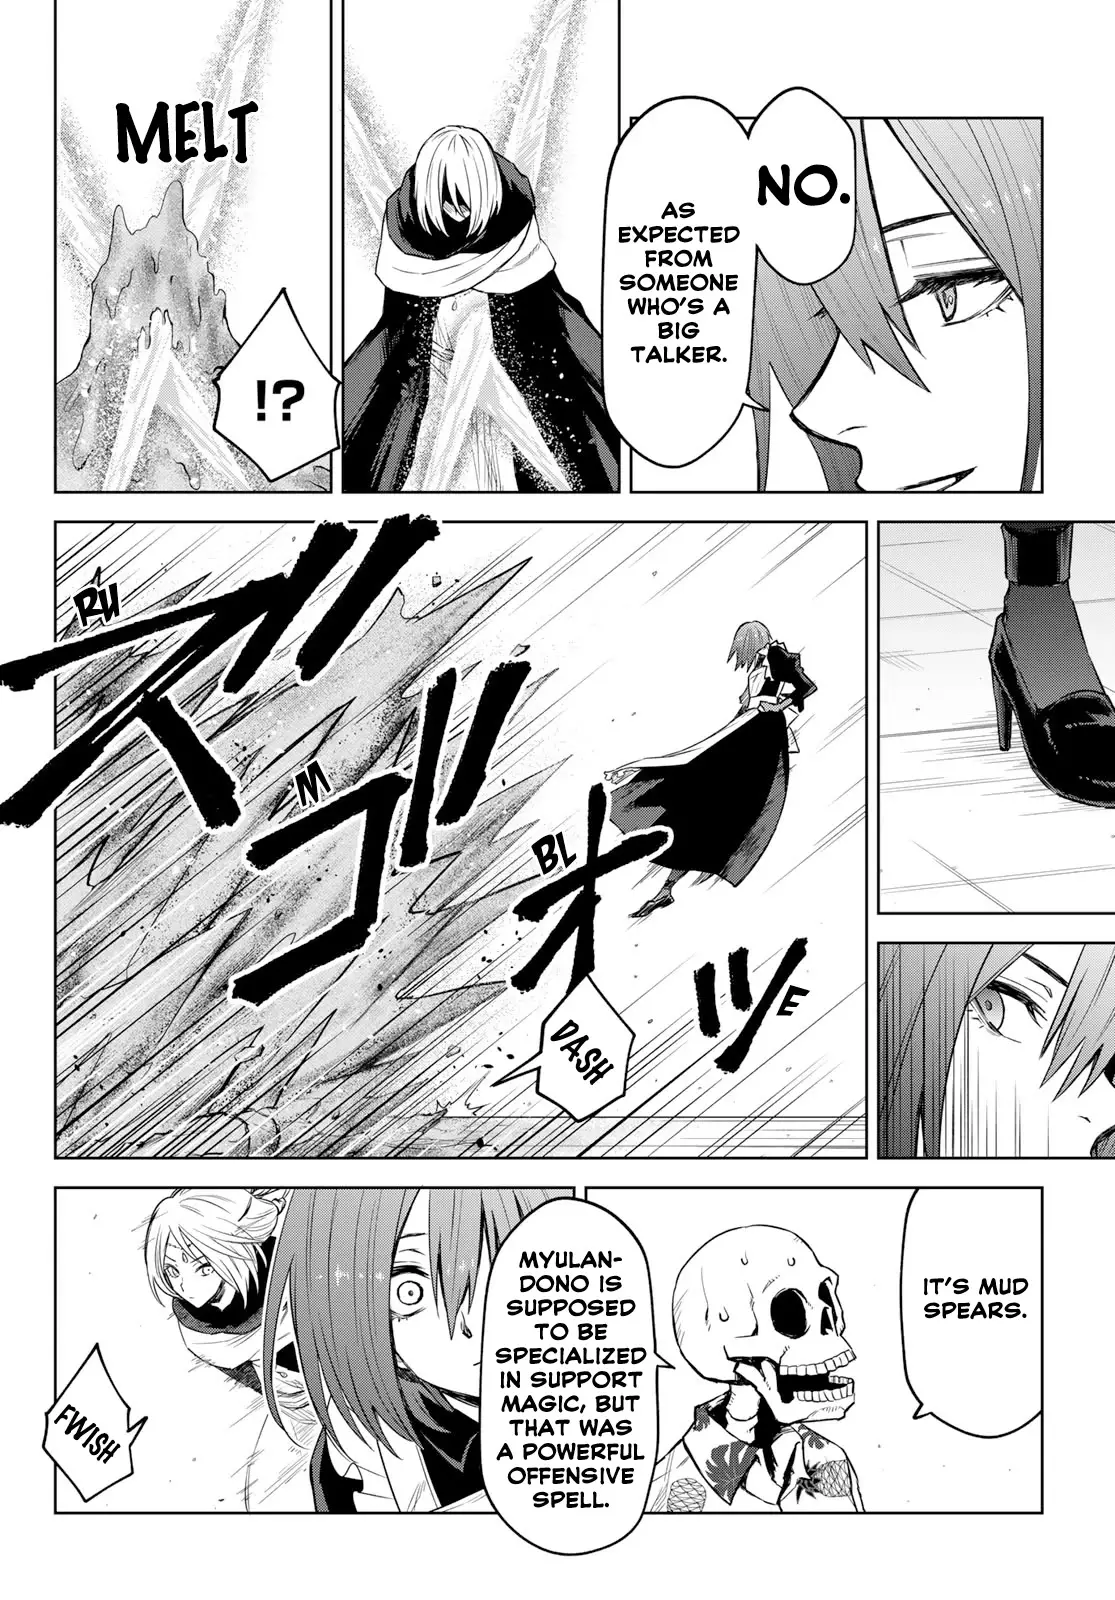 Tensei Shitara Slime Datta Ken: Clayman Revenge - 10 page 10-2e5b1741